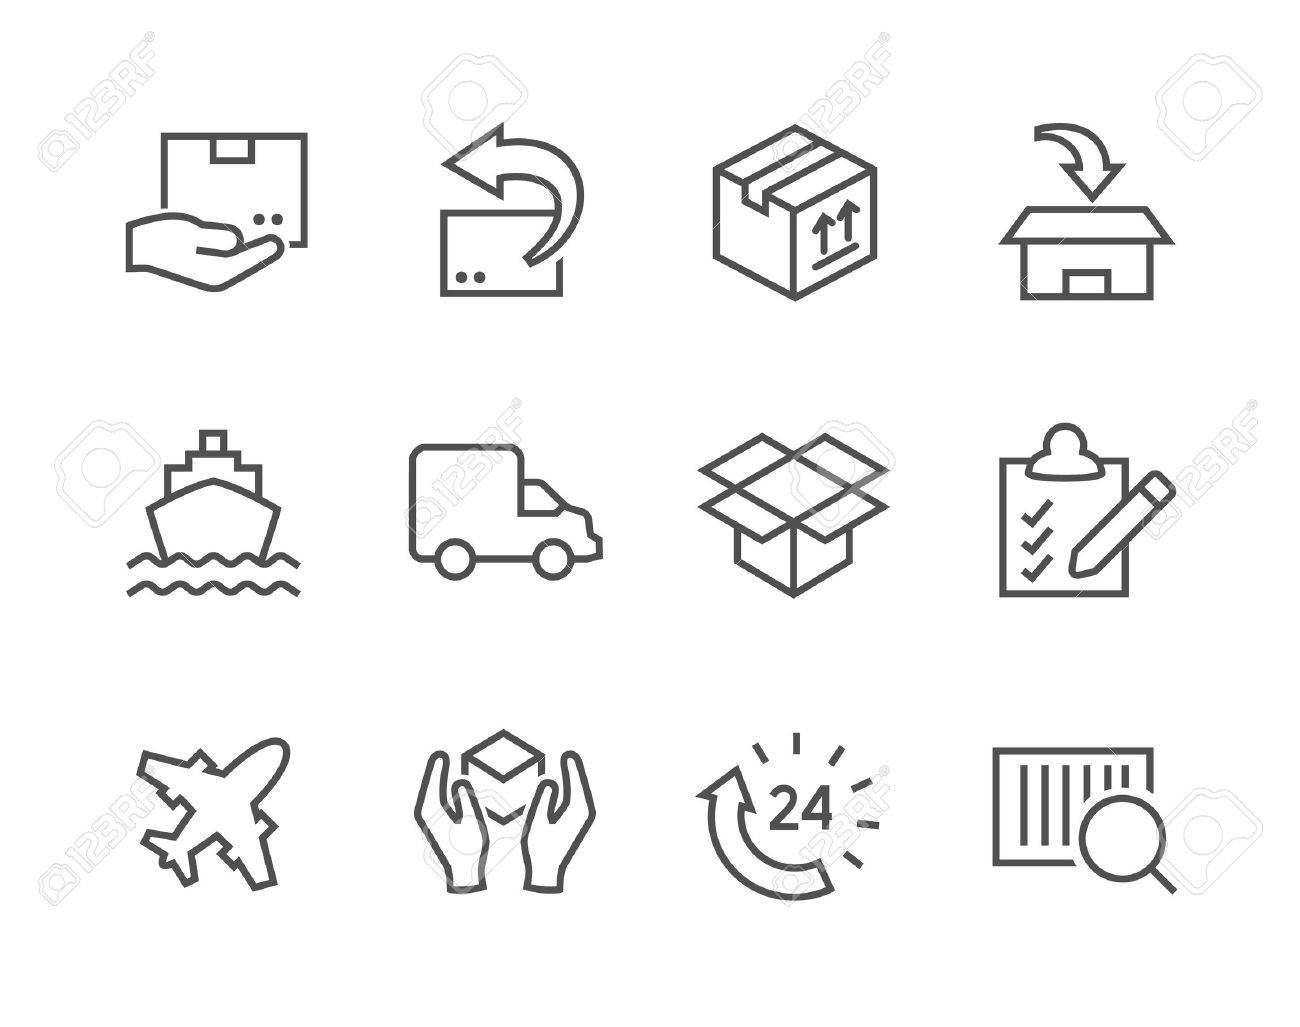 Design Freebies #15: 20 Free High-Quality Line Icon Sets